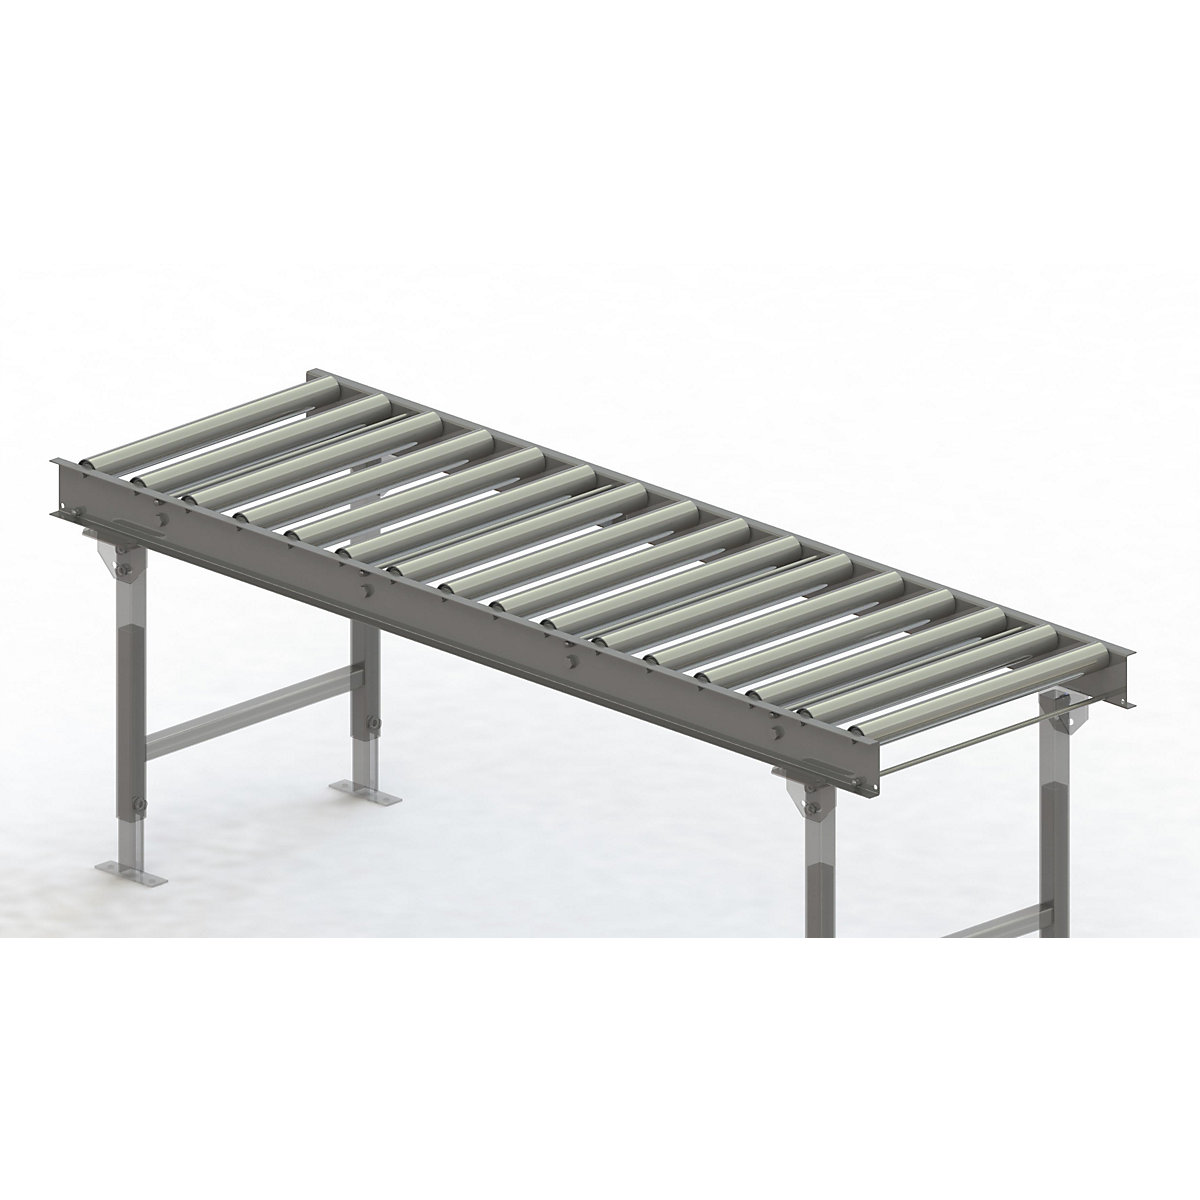 Gura – Roller conveyor, steel frame with zinc plated steel rollers, track width 600 mm, distance between axles 125 mm, length 2 m